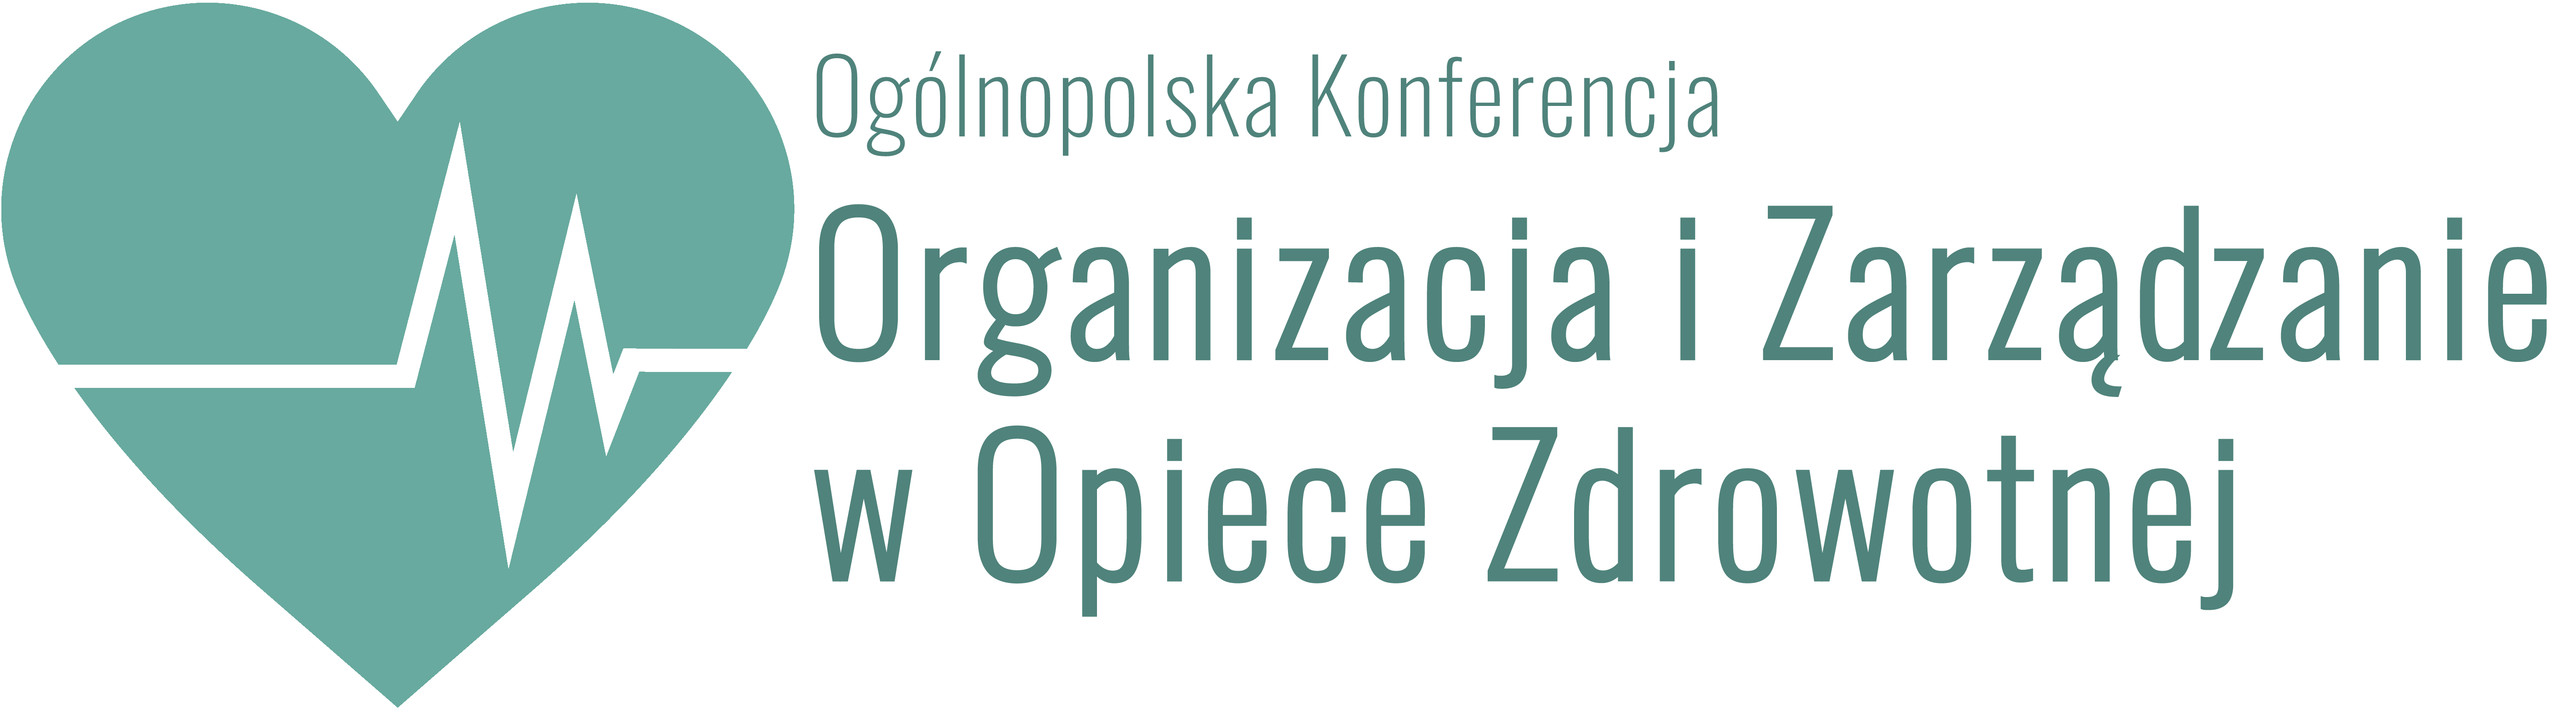 Oglnopolska Konferencja: 